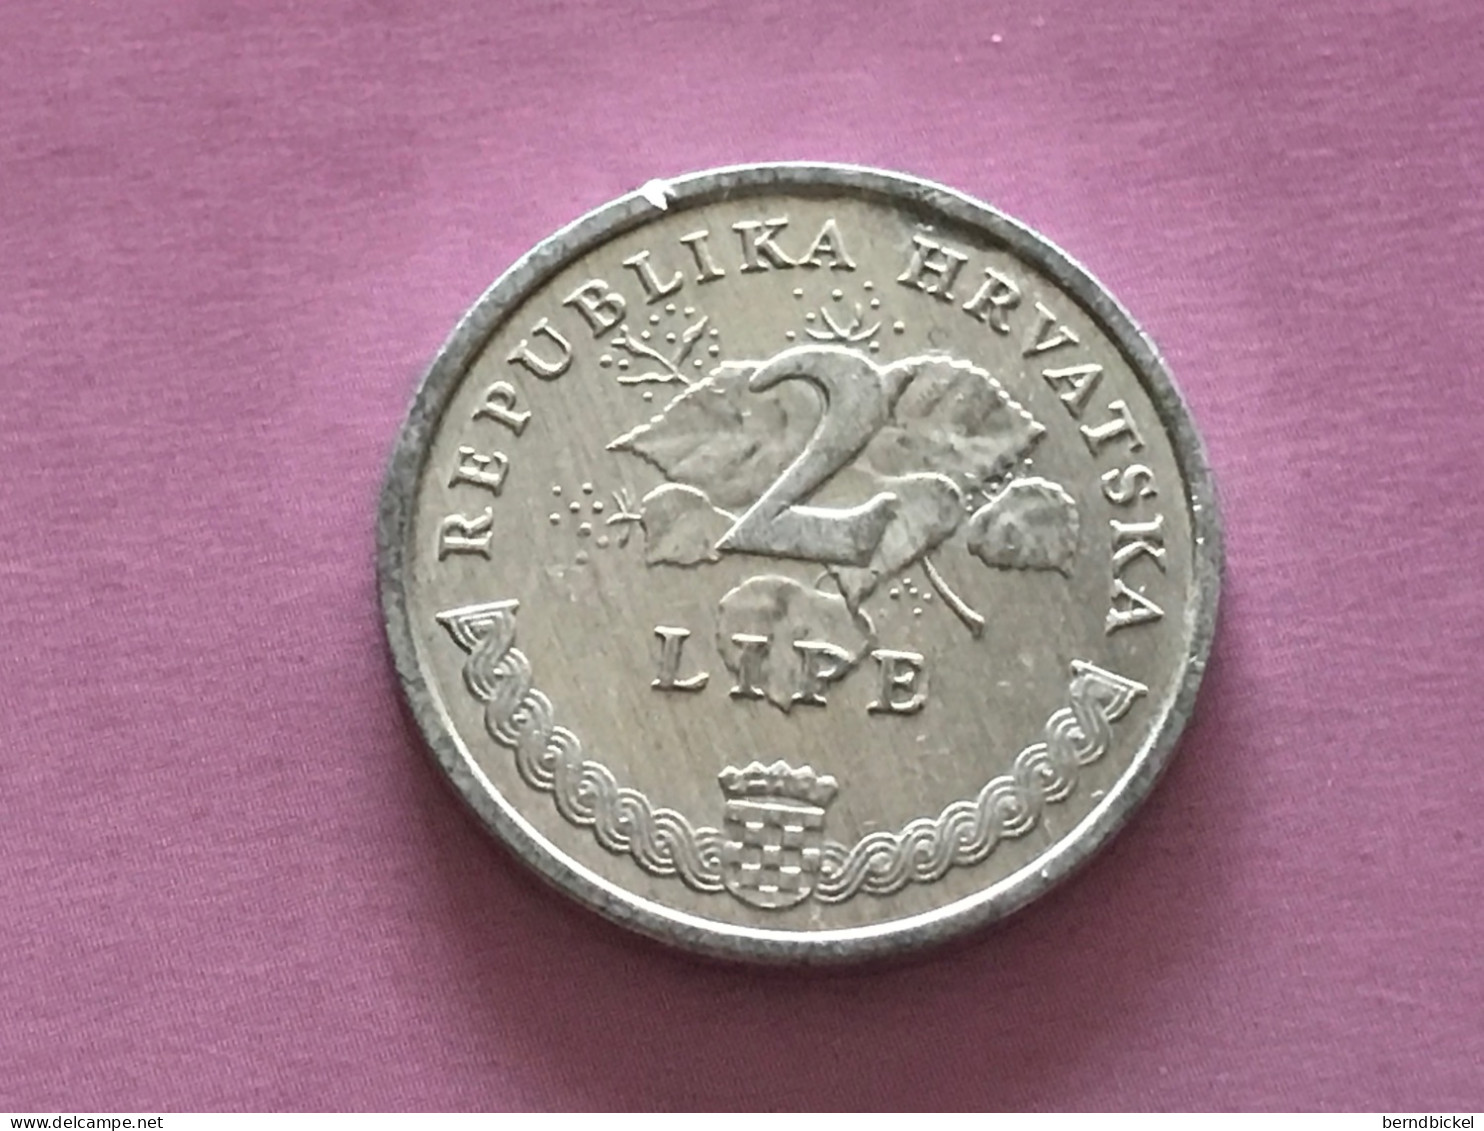 Münze Münzen Umlaufmünze Kroatien 2 Lipa 2005 - Croatia